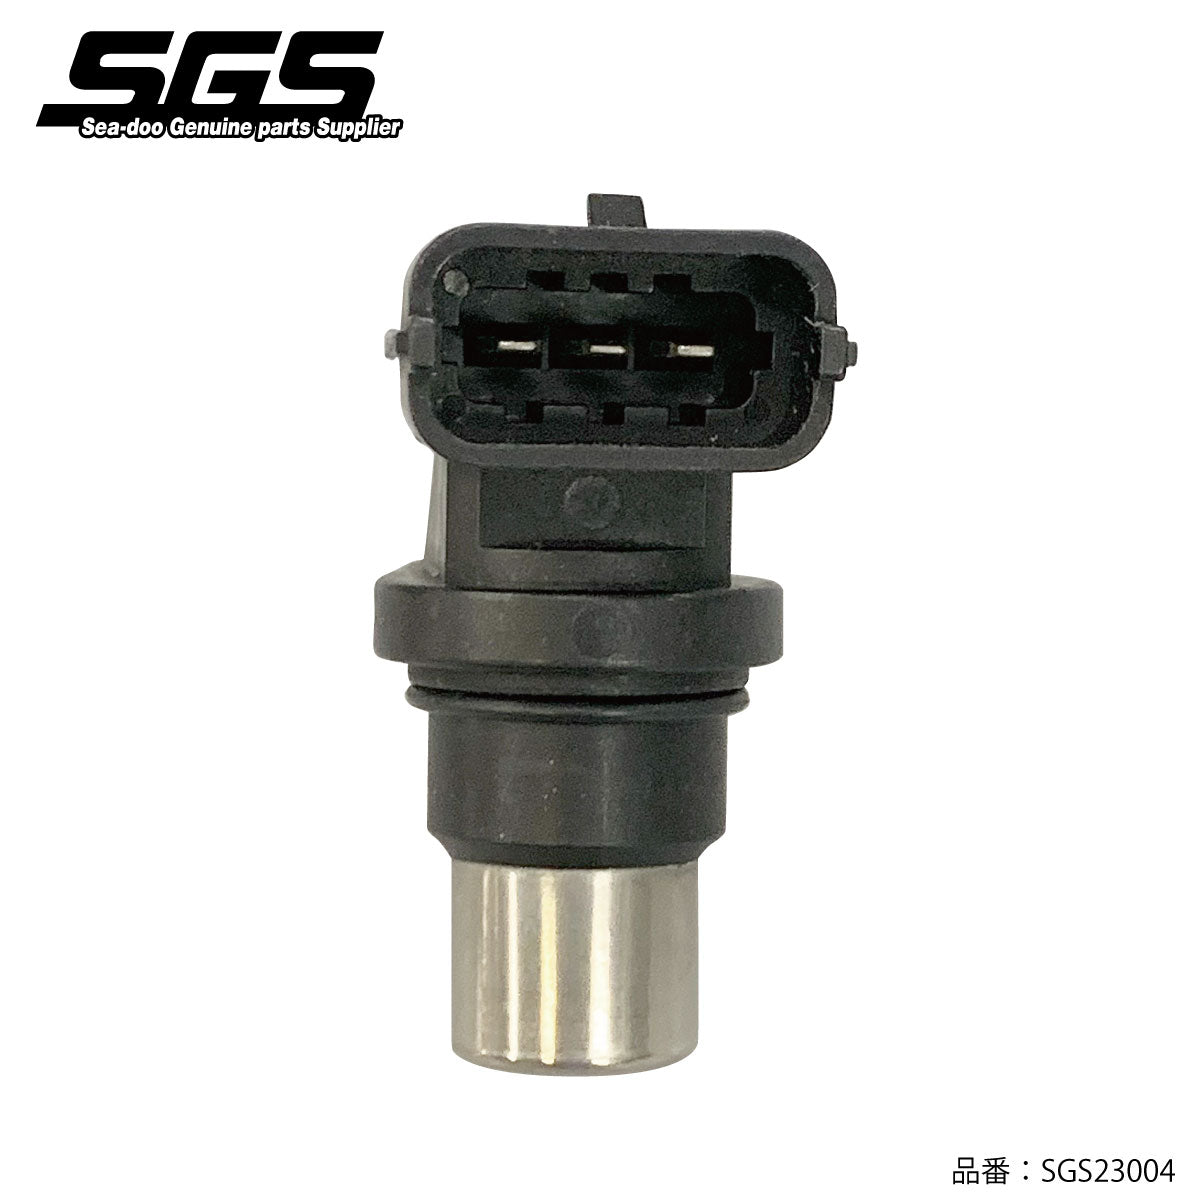 SGS camshaft position sensor assembly SEADOO 4 stroke #420664046 SGS23004